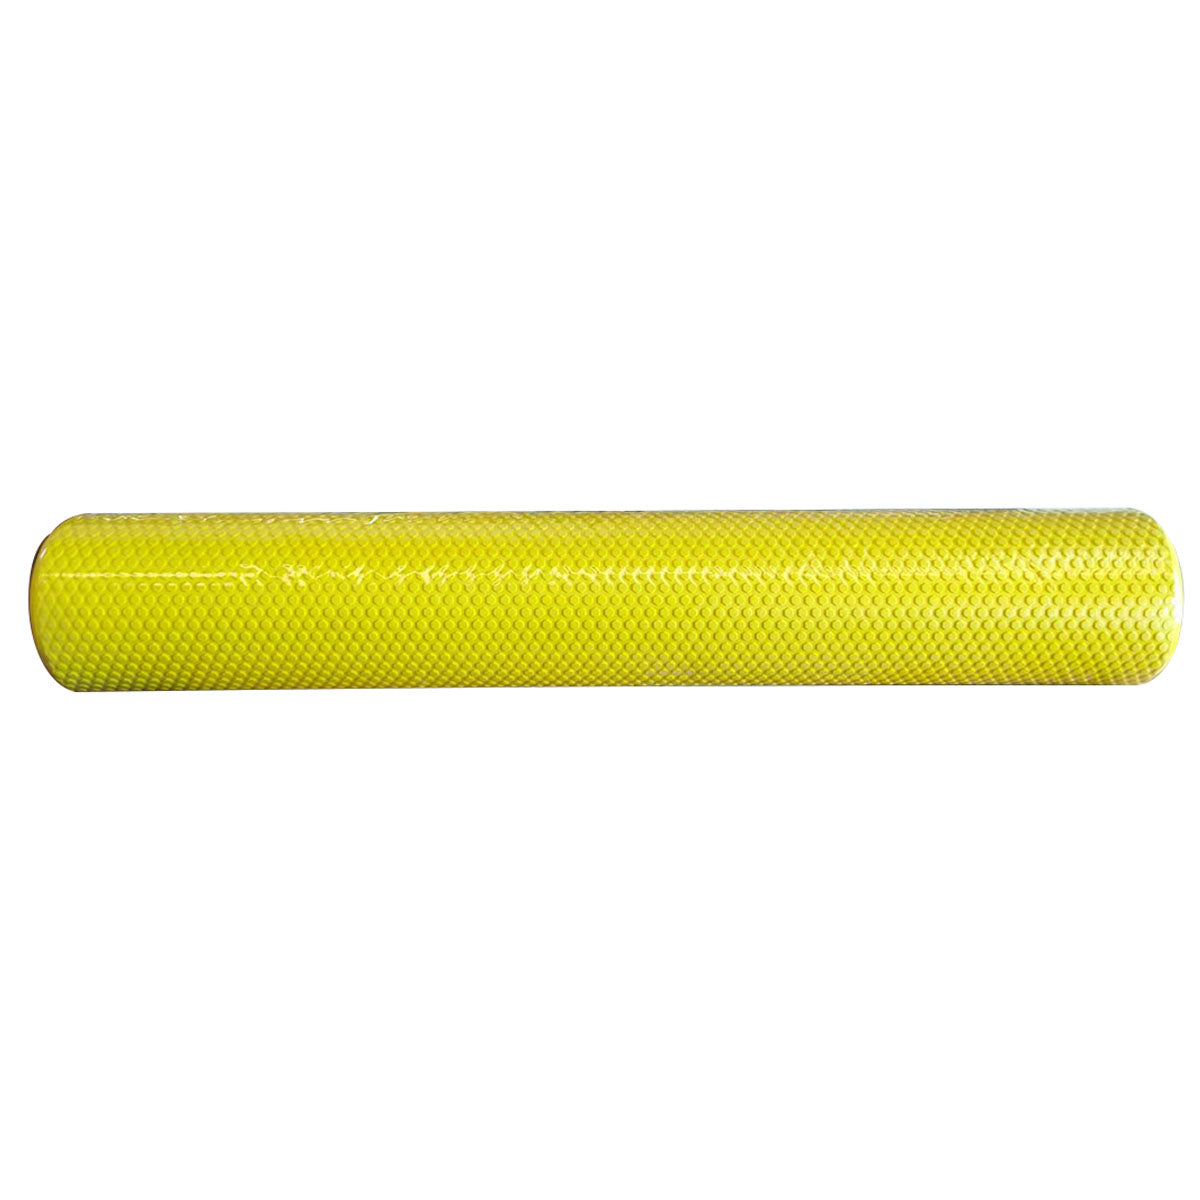 90cm Yoga Foam Yellow